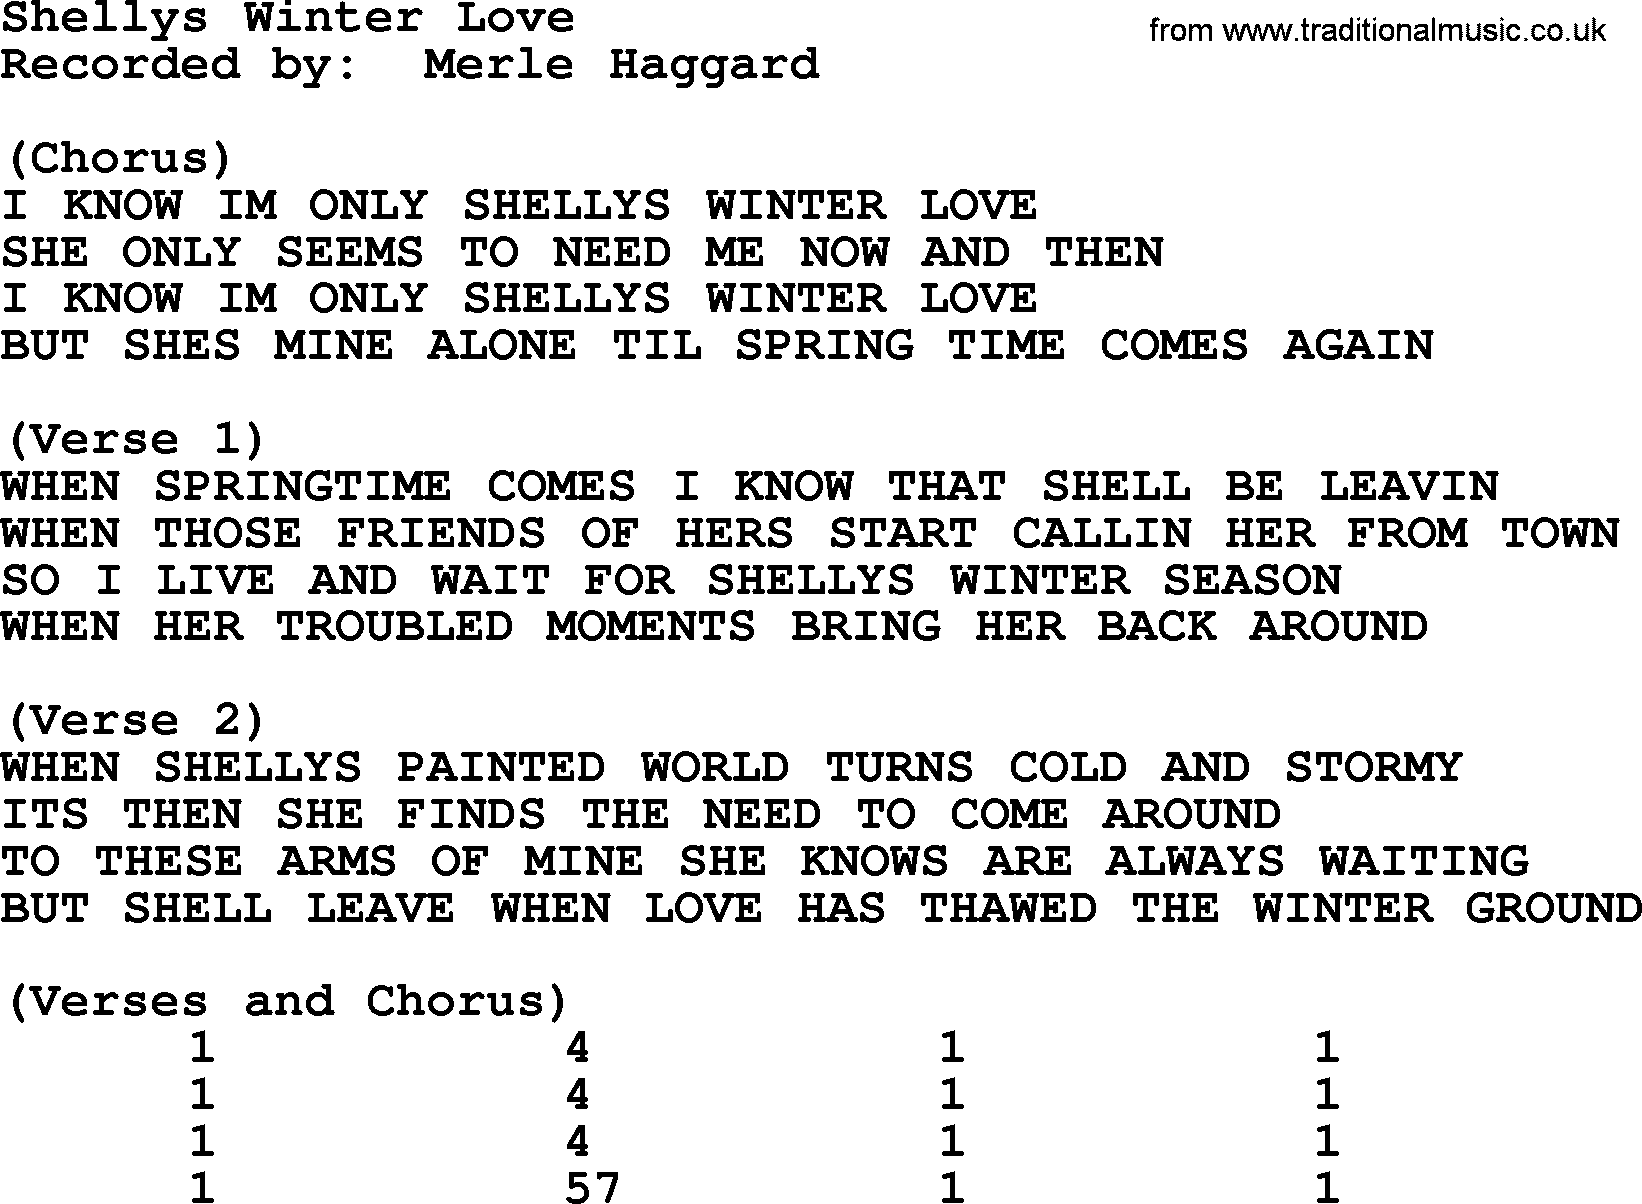 Merle Haggard song: Shellys Winter Love, lyrics and chords